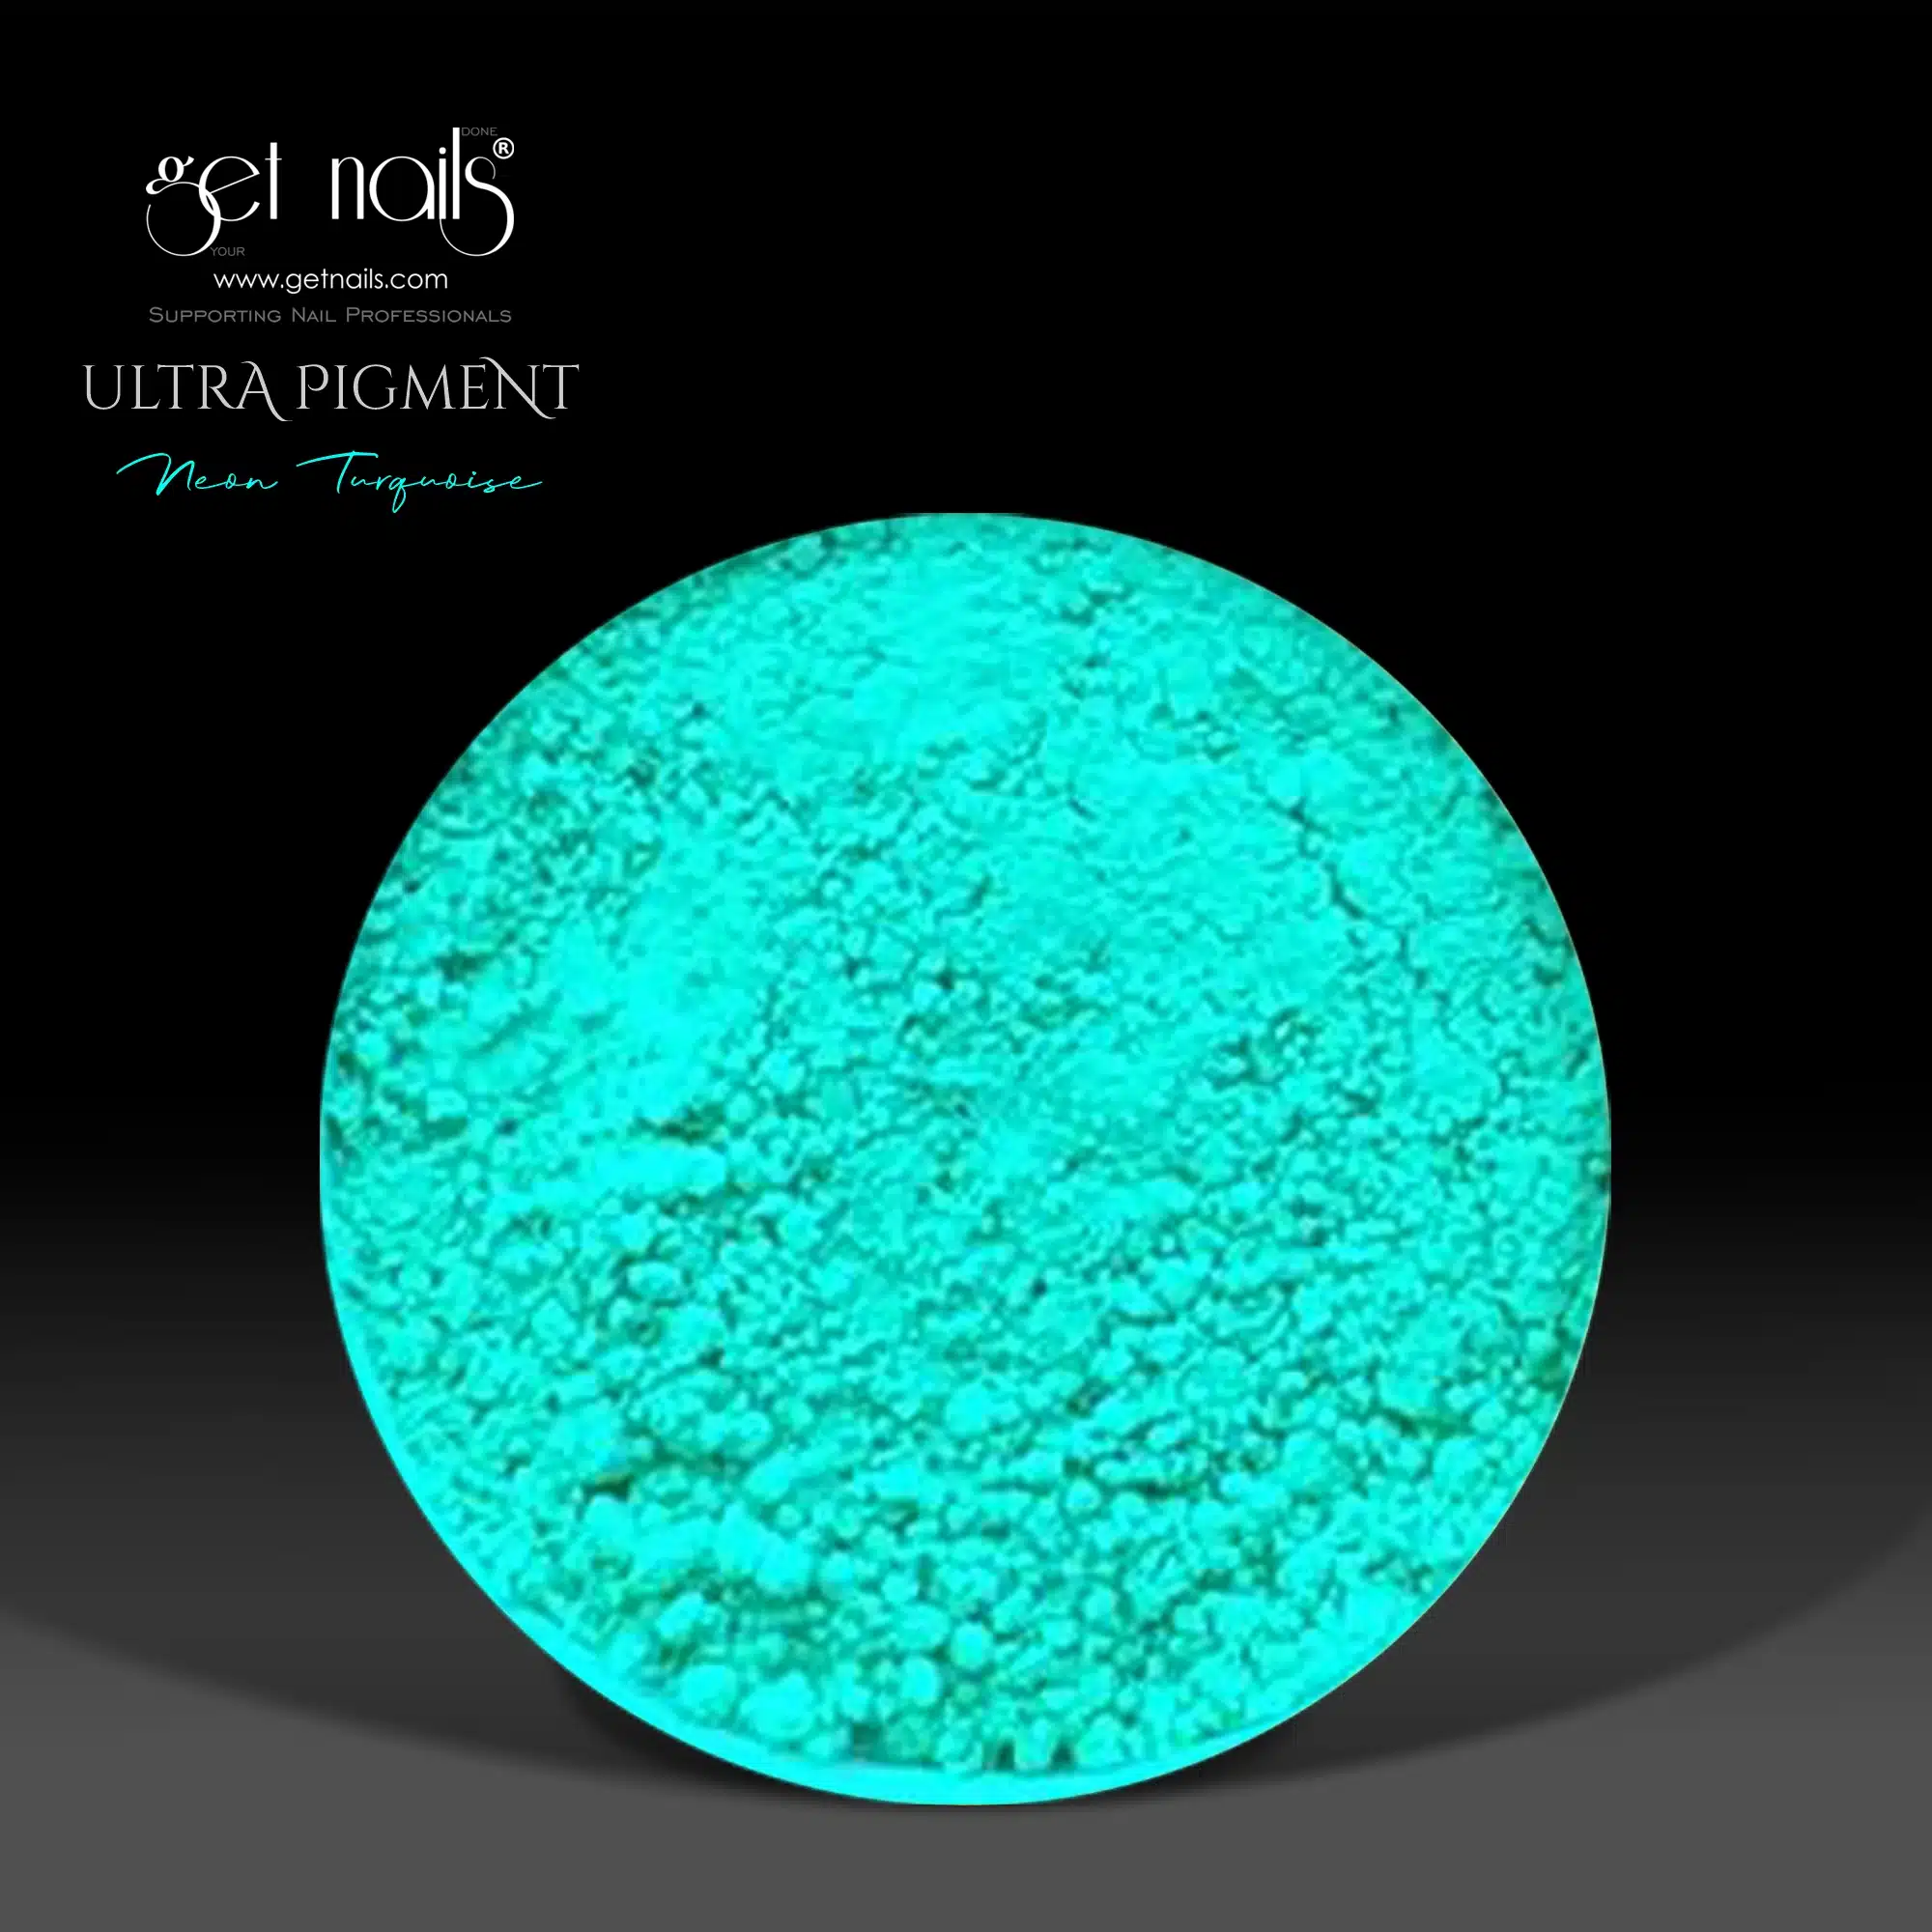 Get Nails Austria - Ultra Pigment Neon Türkiz 1.5g